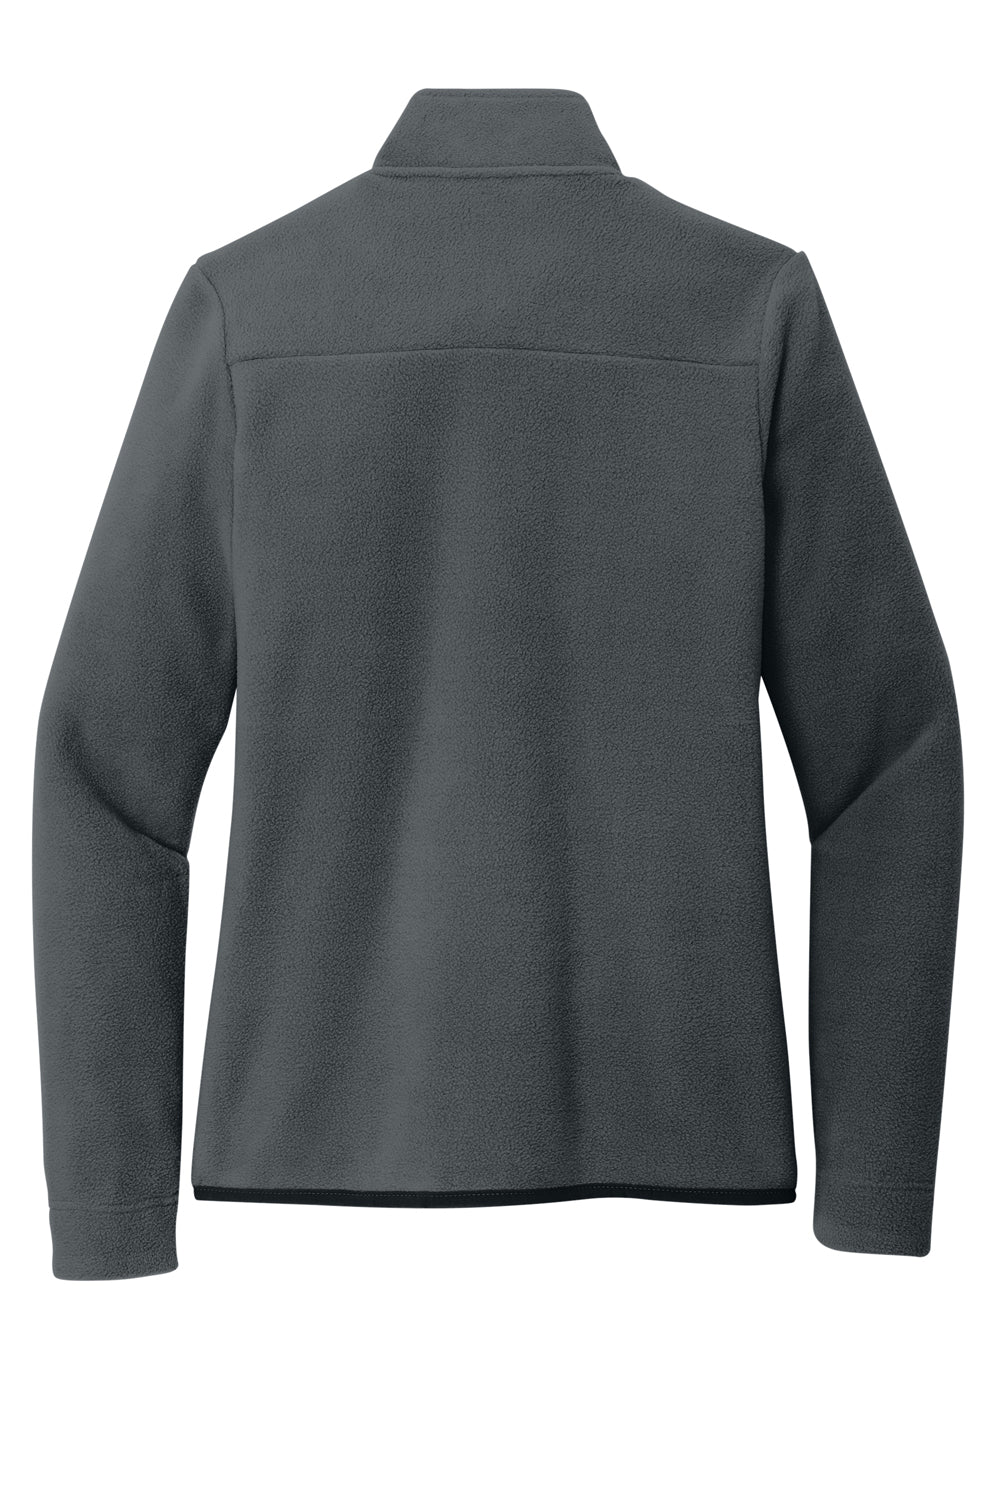 Port Authority L110 Womens Connection Fleece Full Zip Jacket Charcoal Grey Flat Back